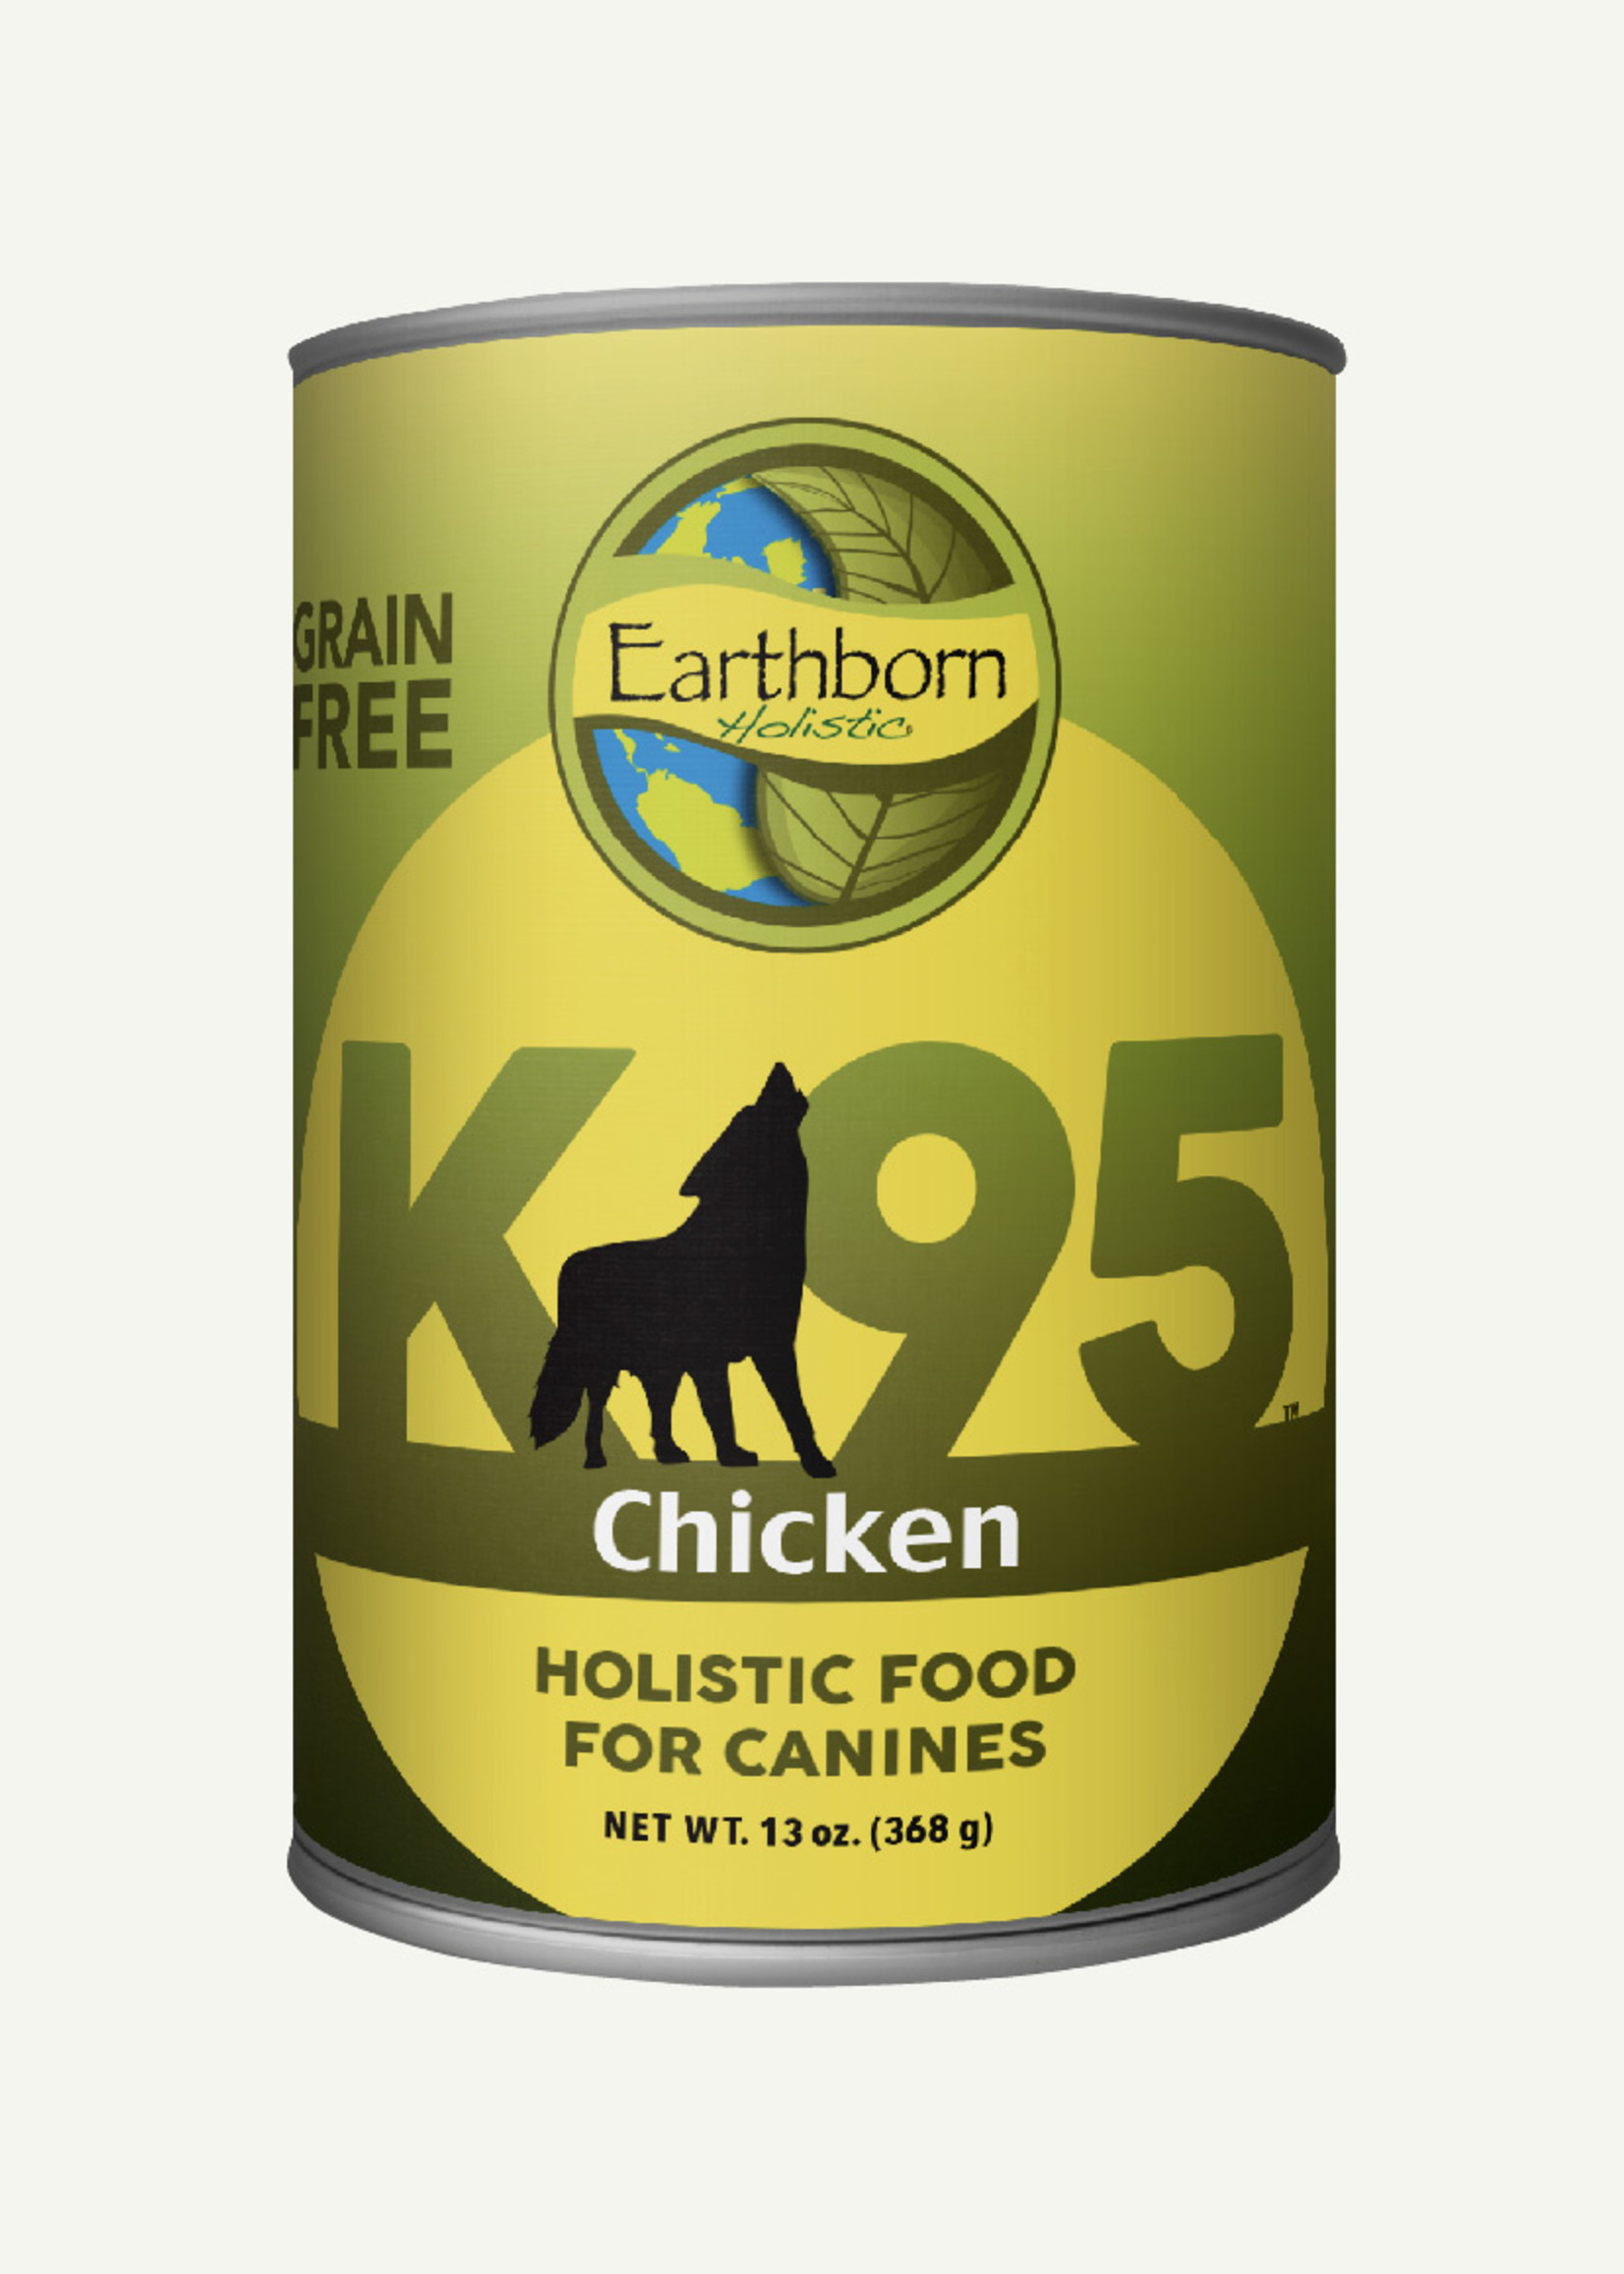 Earthborn Earthborn K95 Chicken Grain Free 13 oz